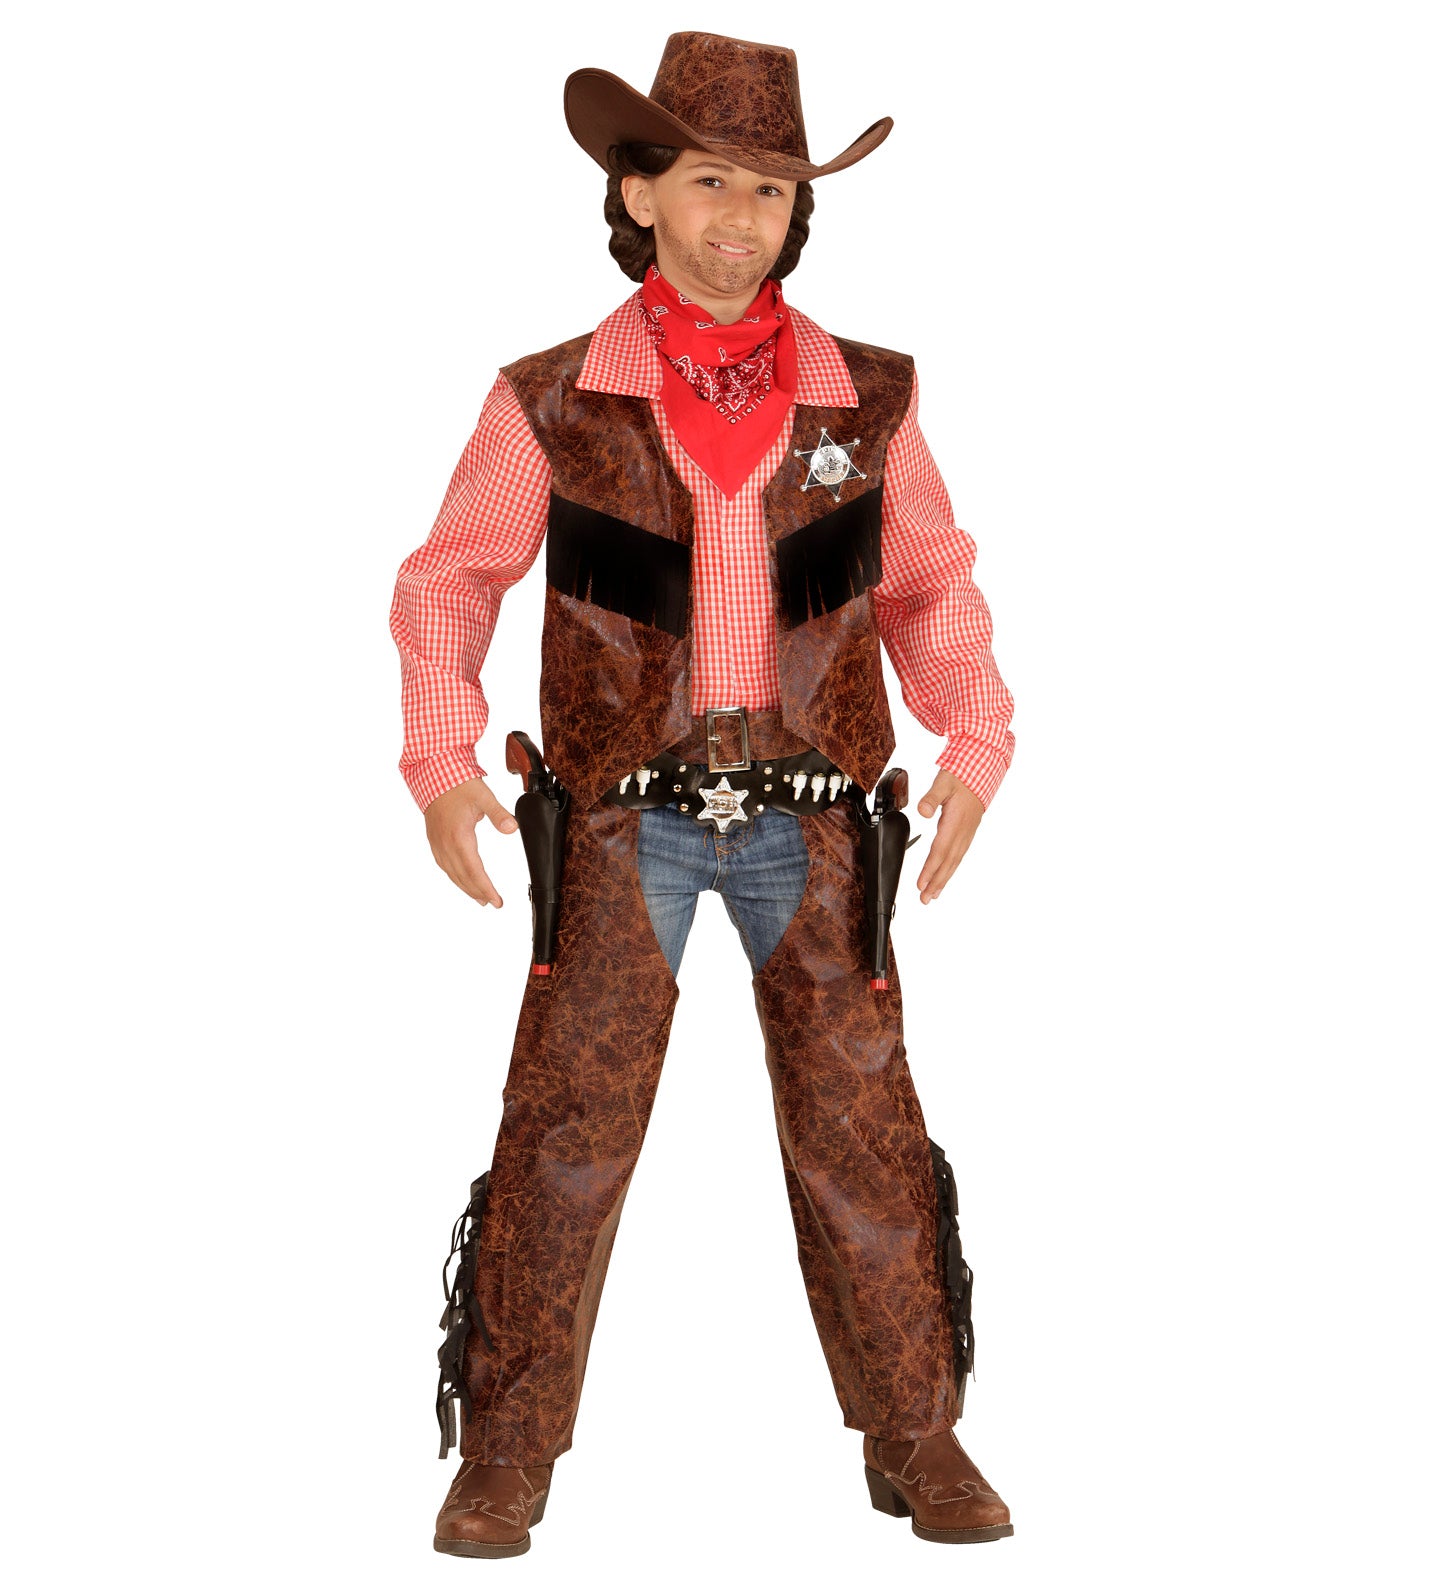 Lonestar Cowboy Costume Kids